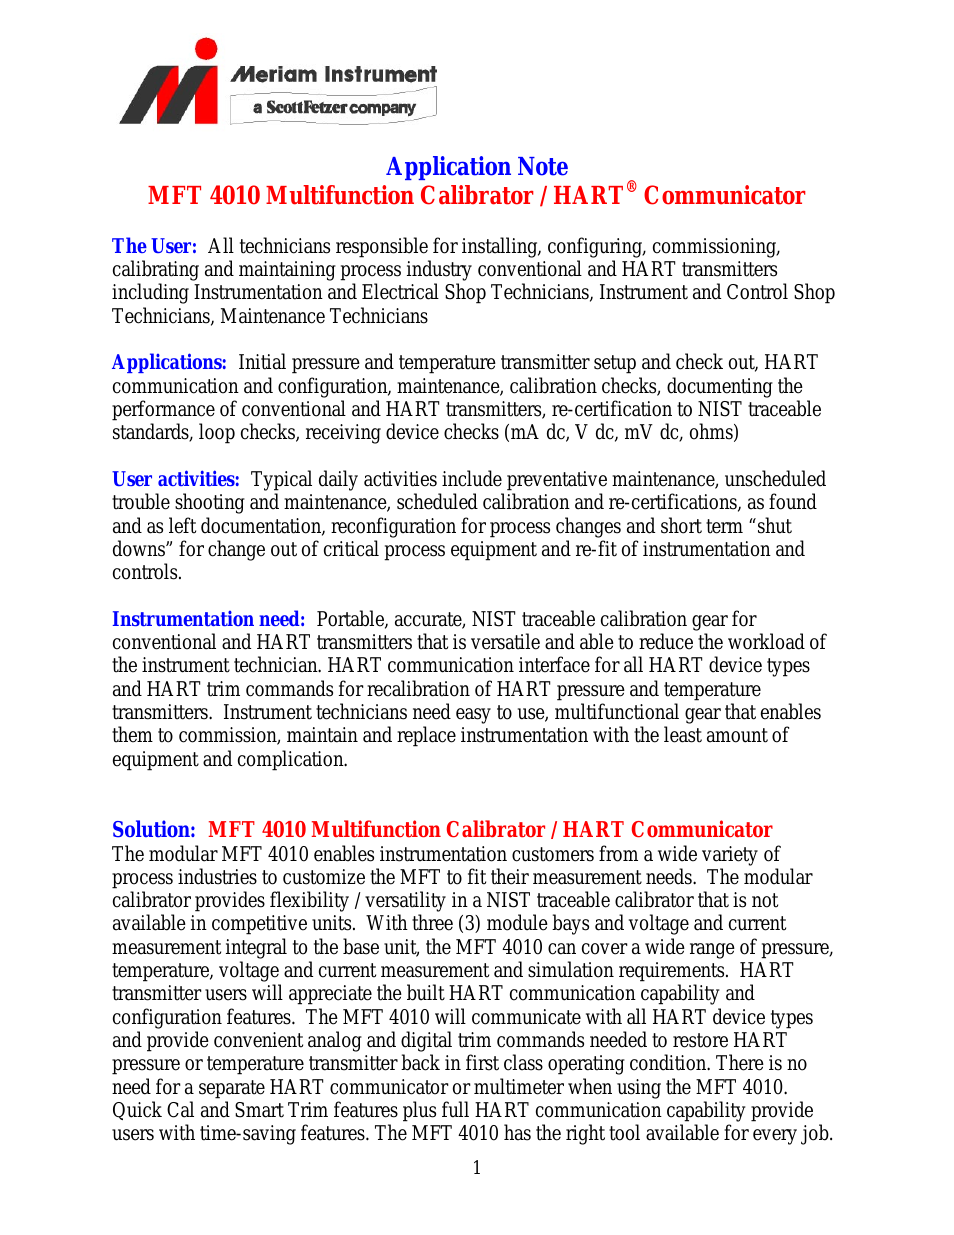 MFT4000 CE IS Multi Function Modular Calibrator_HART Communicator